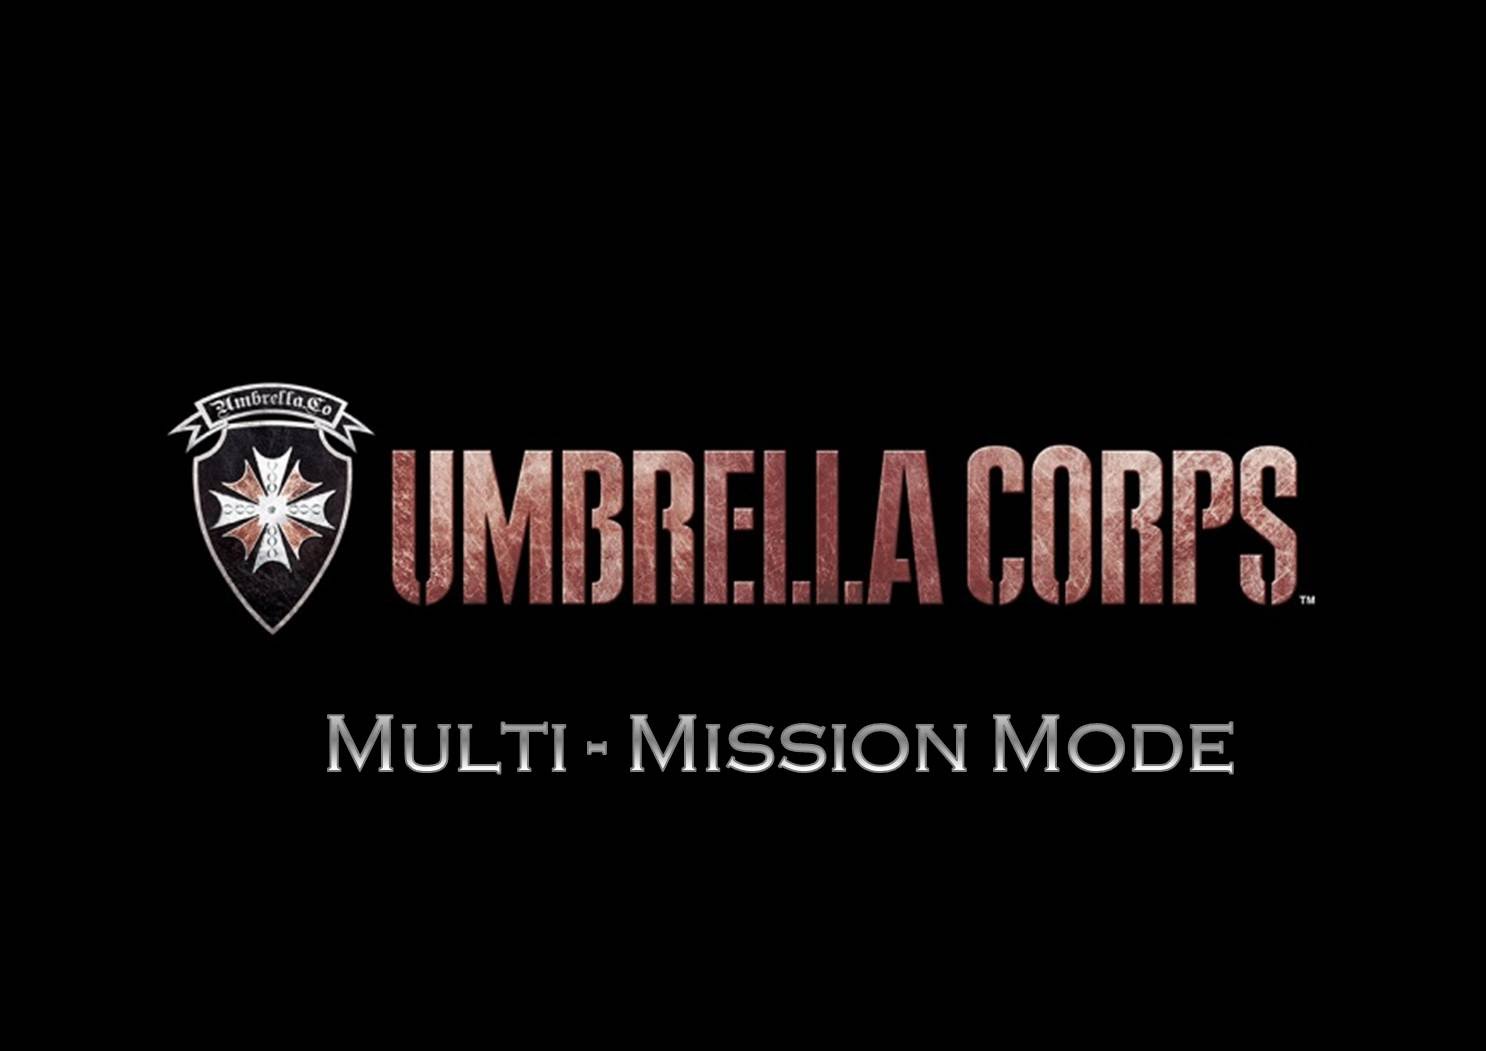 UMBRELLA CORPS - Introducing Multi-Mission Mode!